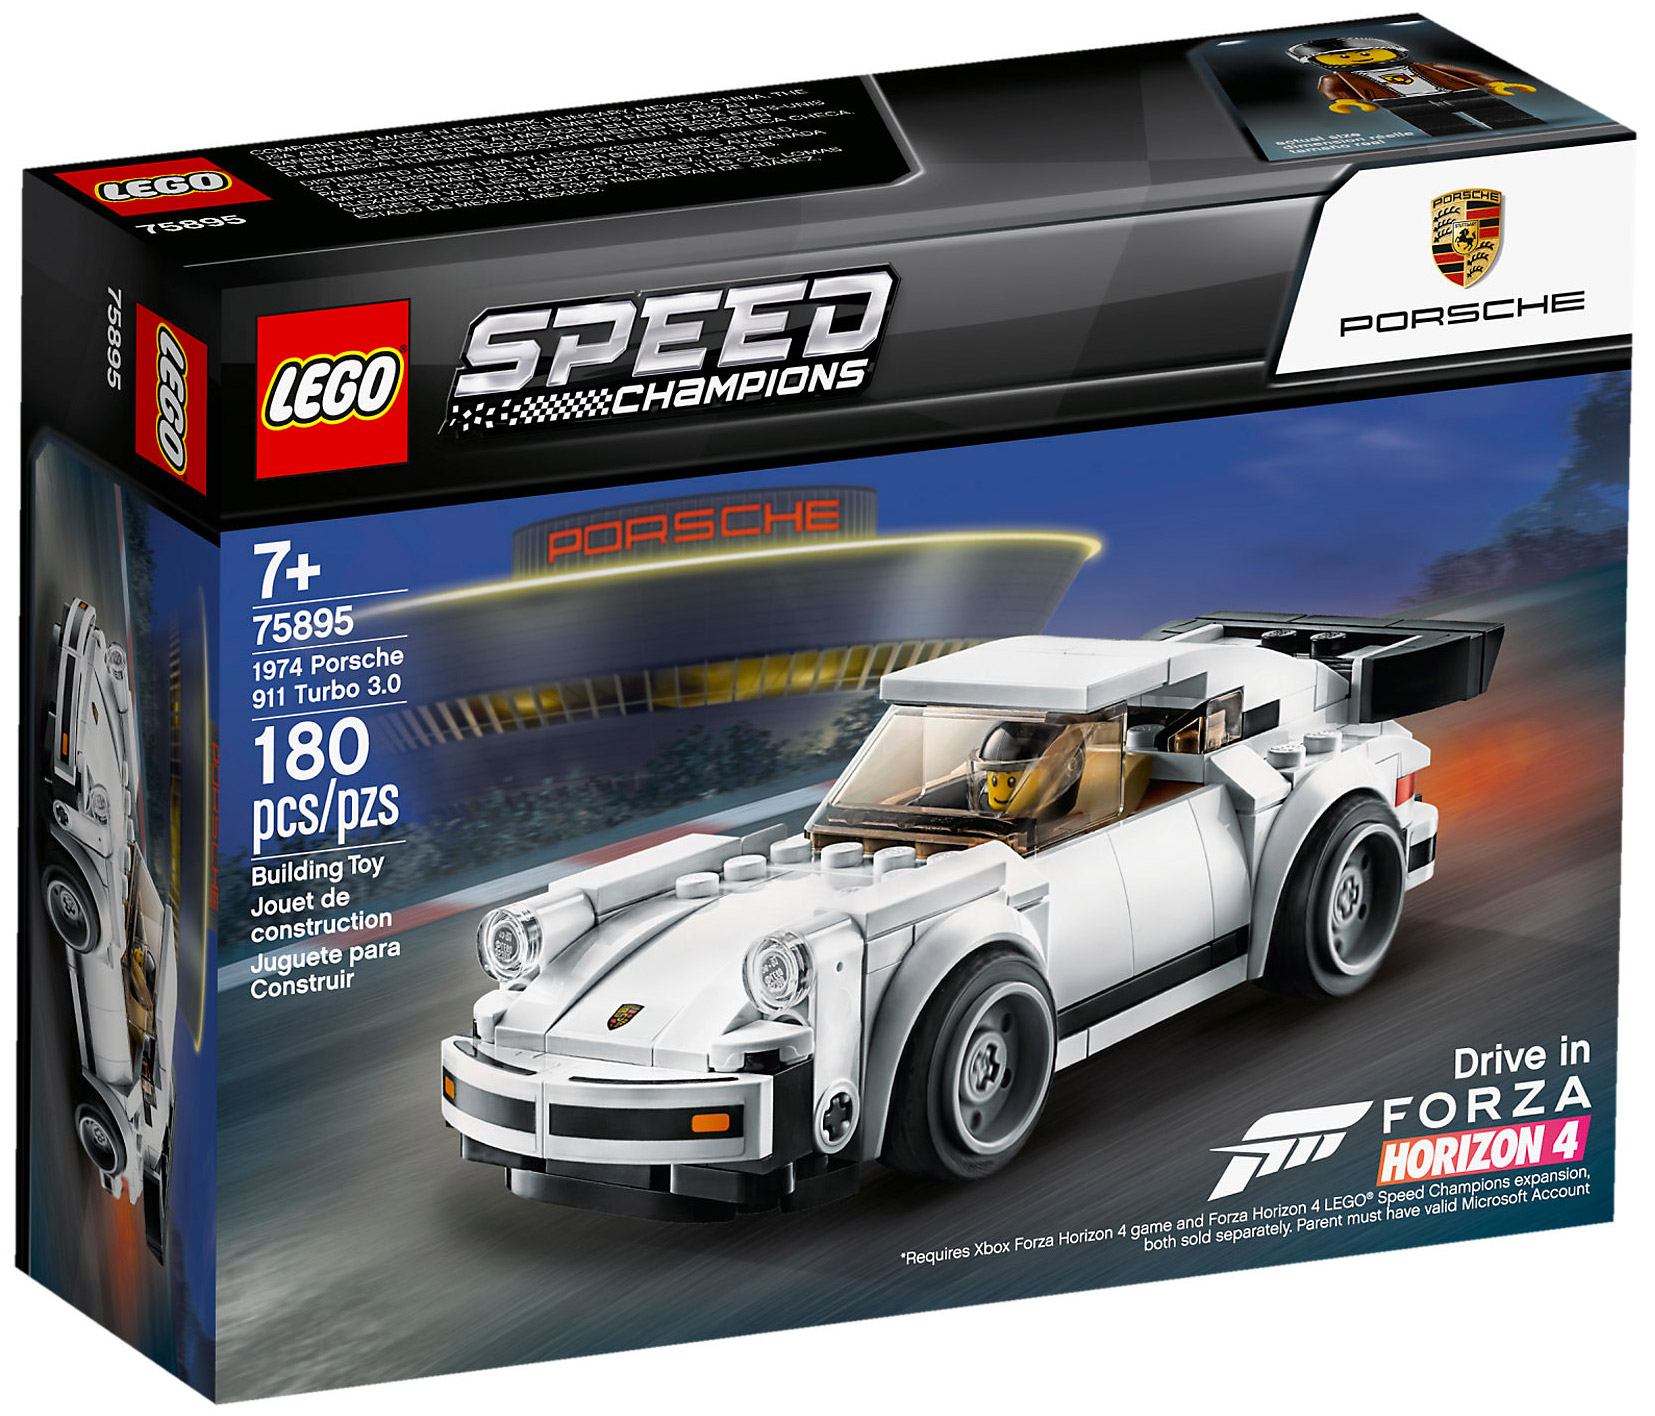 LEGO Speed Champions 75895 pas cher, 1974 Porsche 911 Turbo 3.0